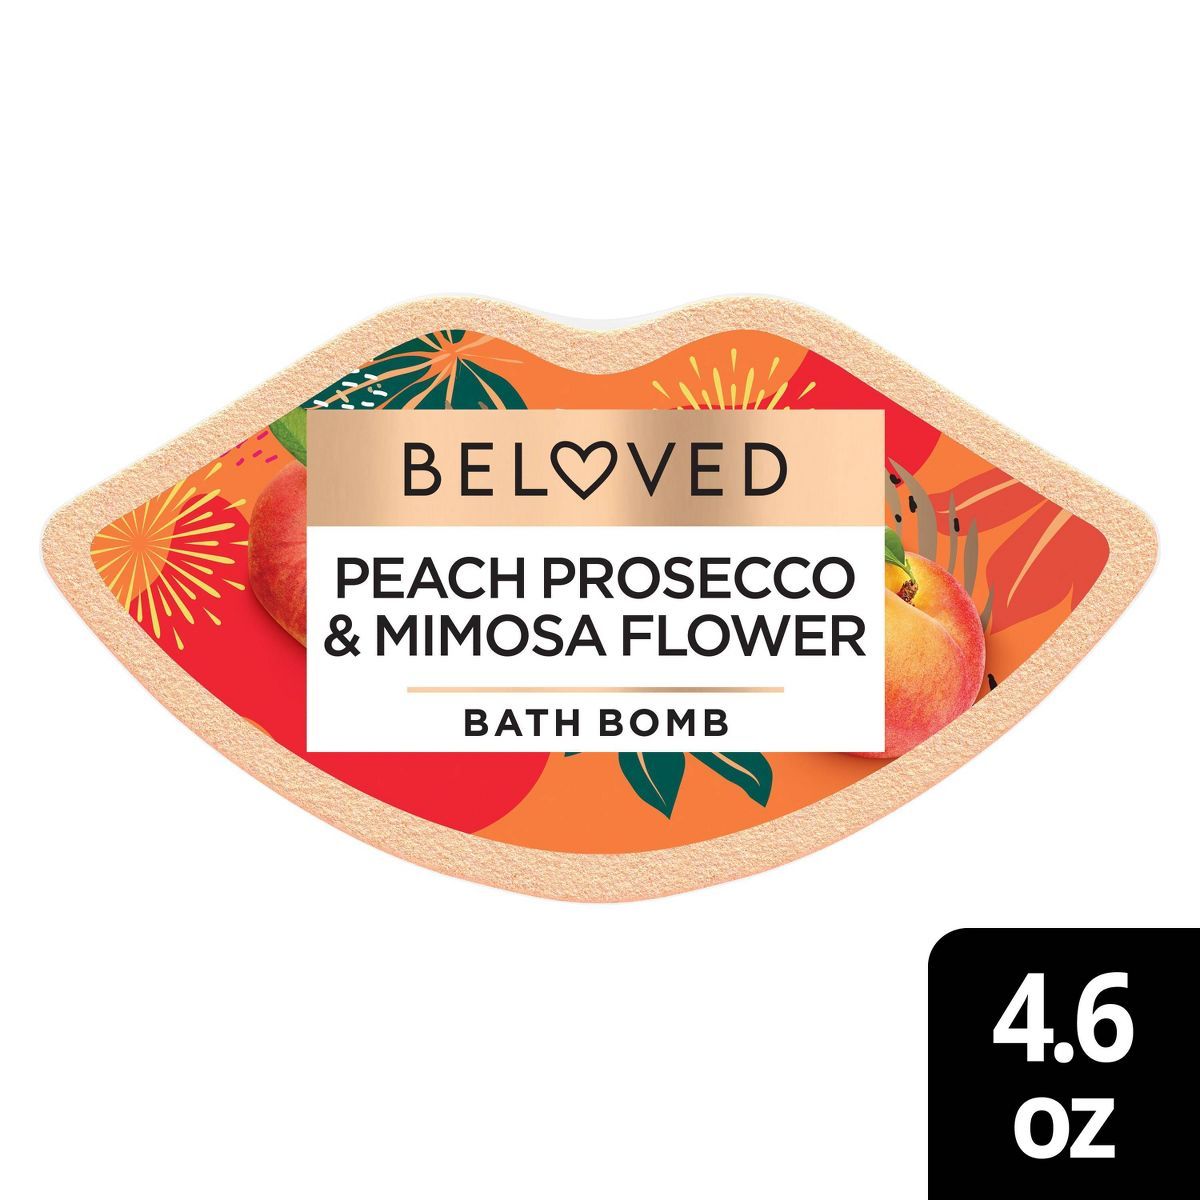 Beloved Bath Bomb - Peach Prosecco & Mimosa Flower - 4.6oz | Target